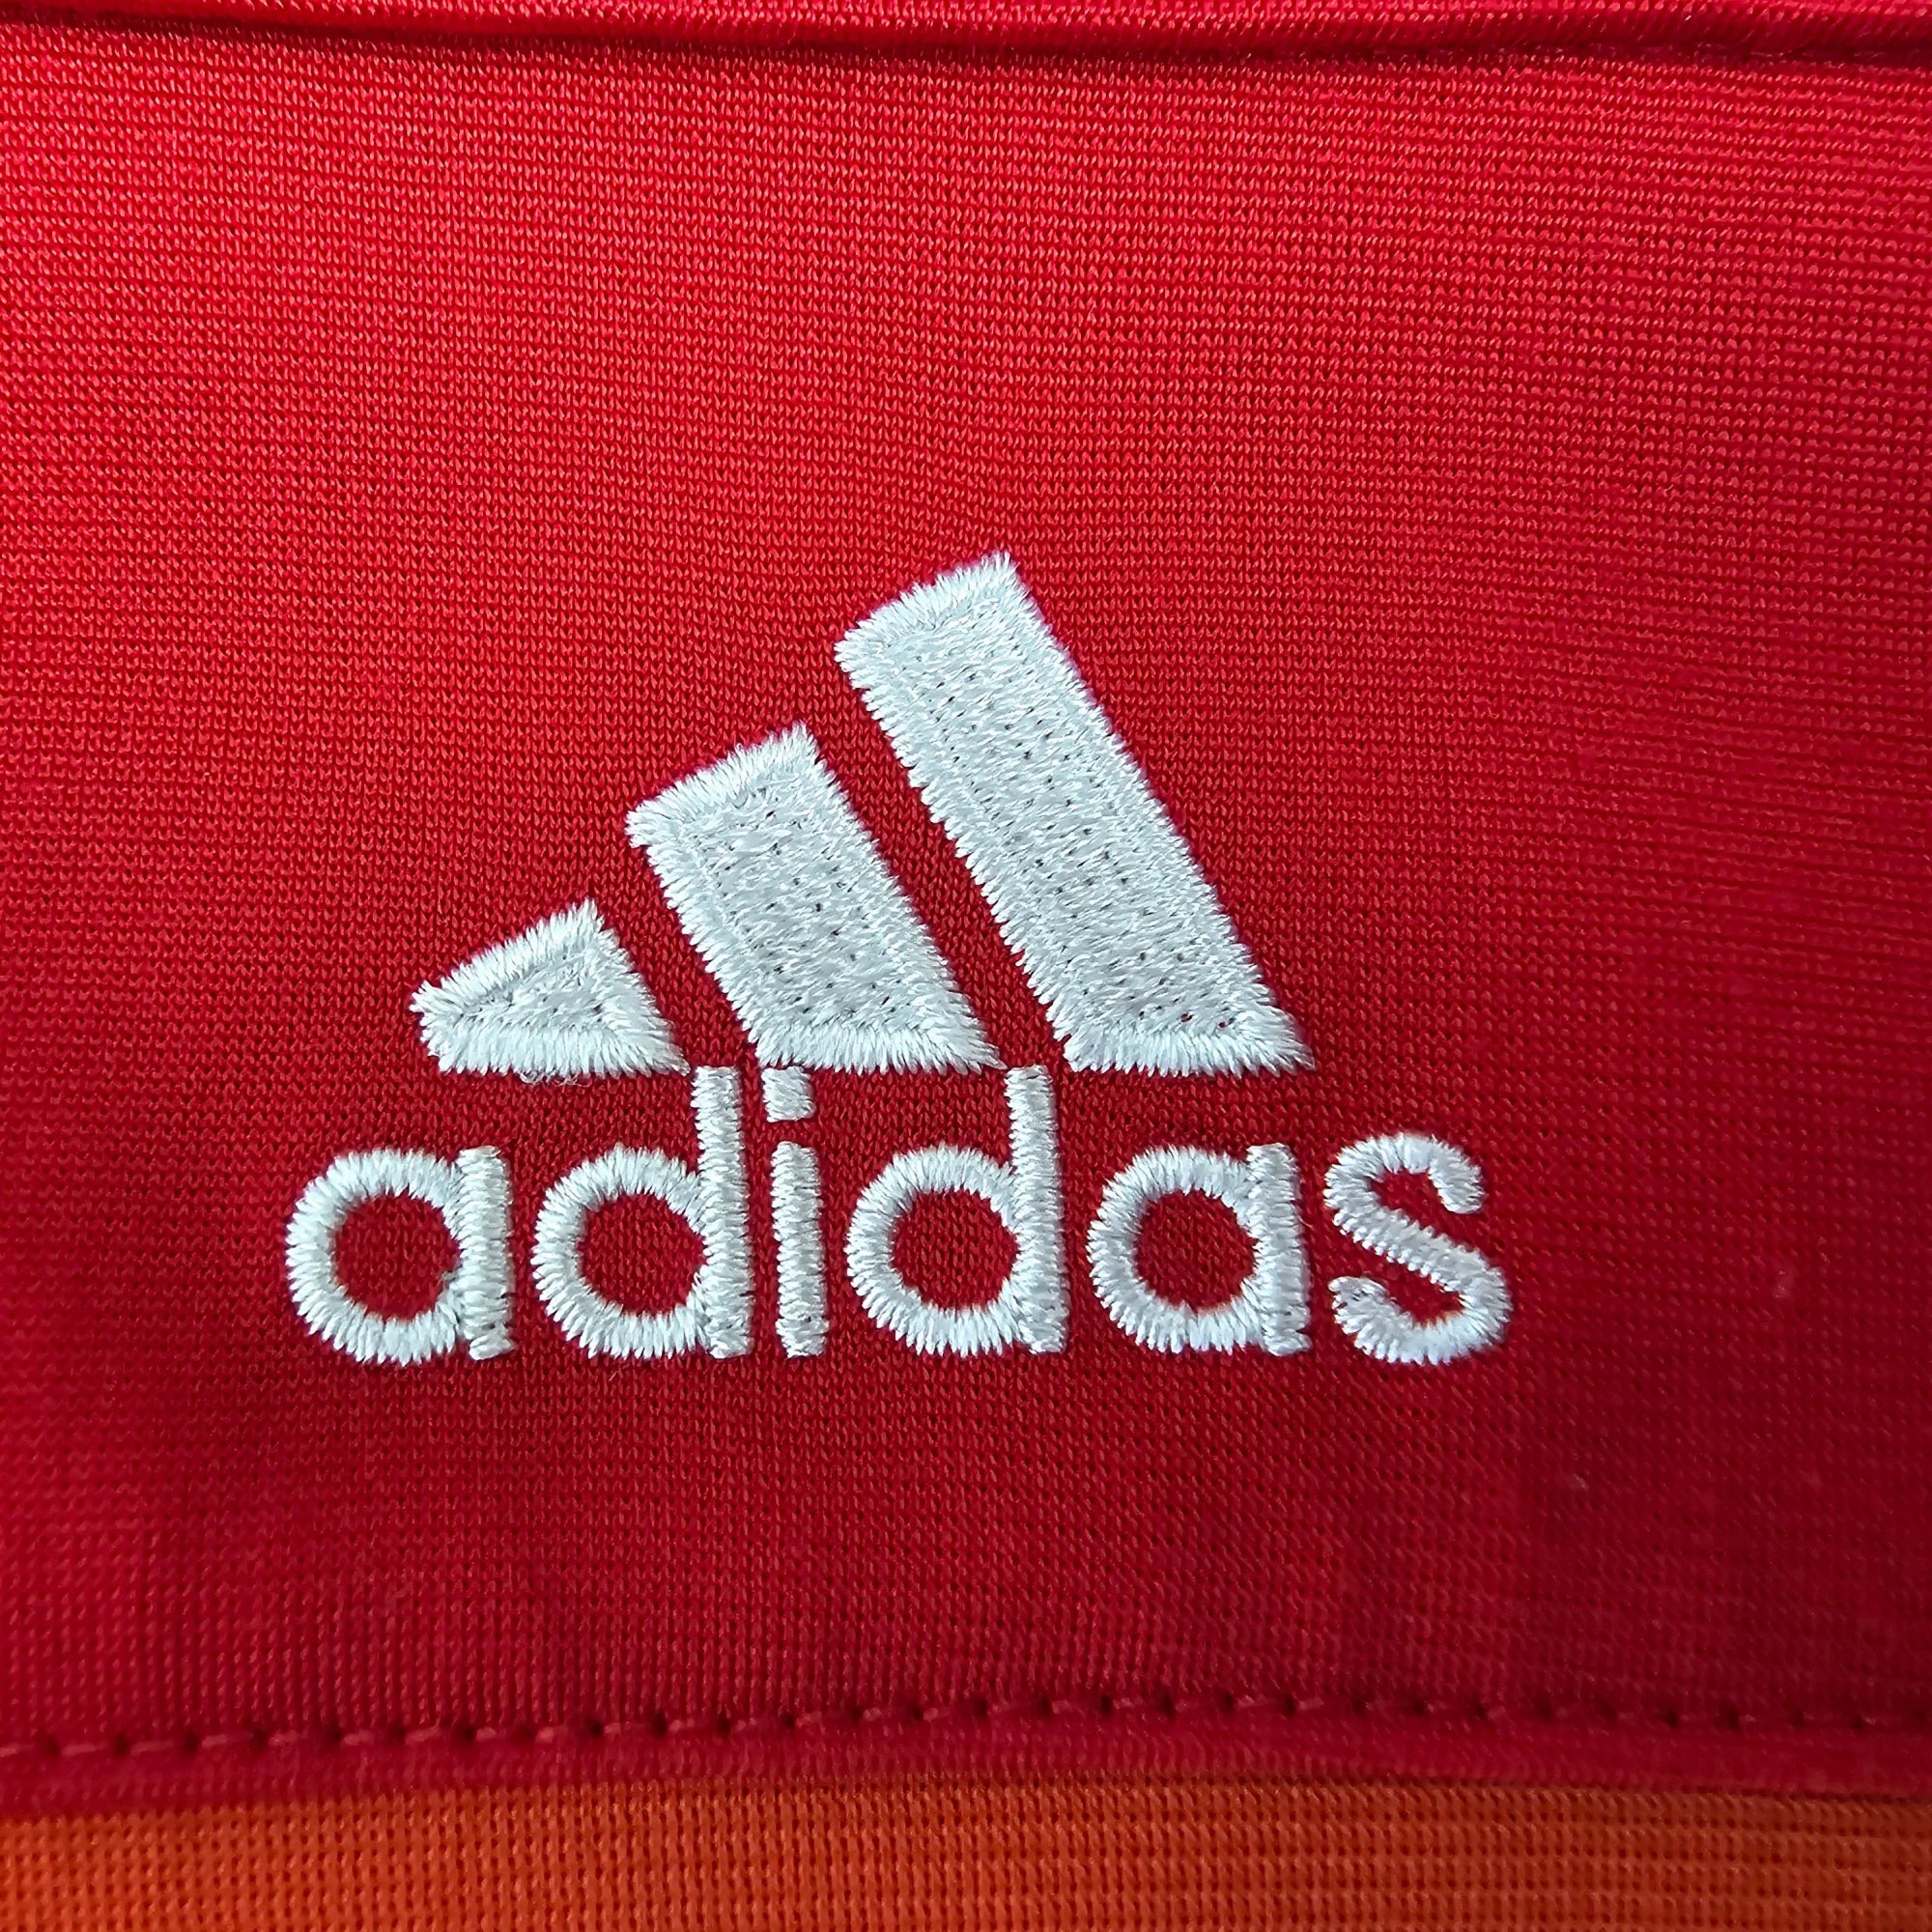 Adidas Unisex Red Orange Track Top Tracksuit Full Zip UK